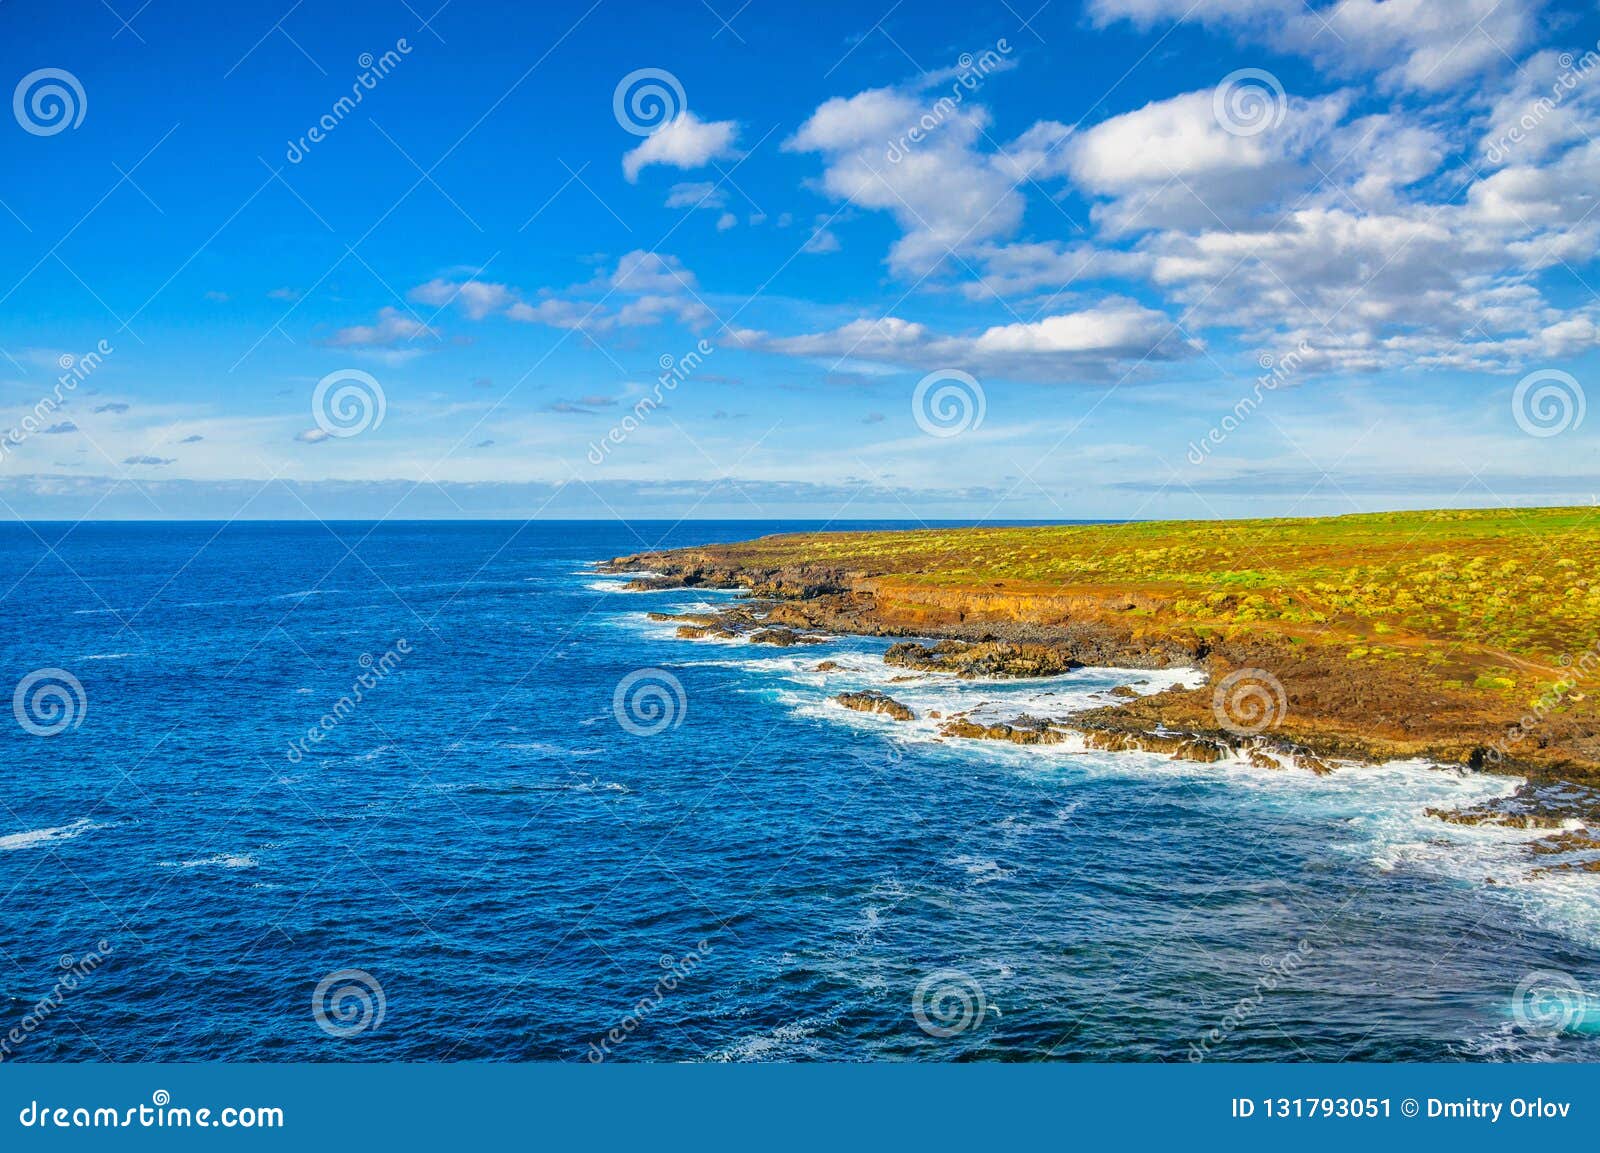 north-west coast of tenerife near punto teno lighthouse, canarian islands